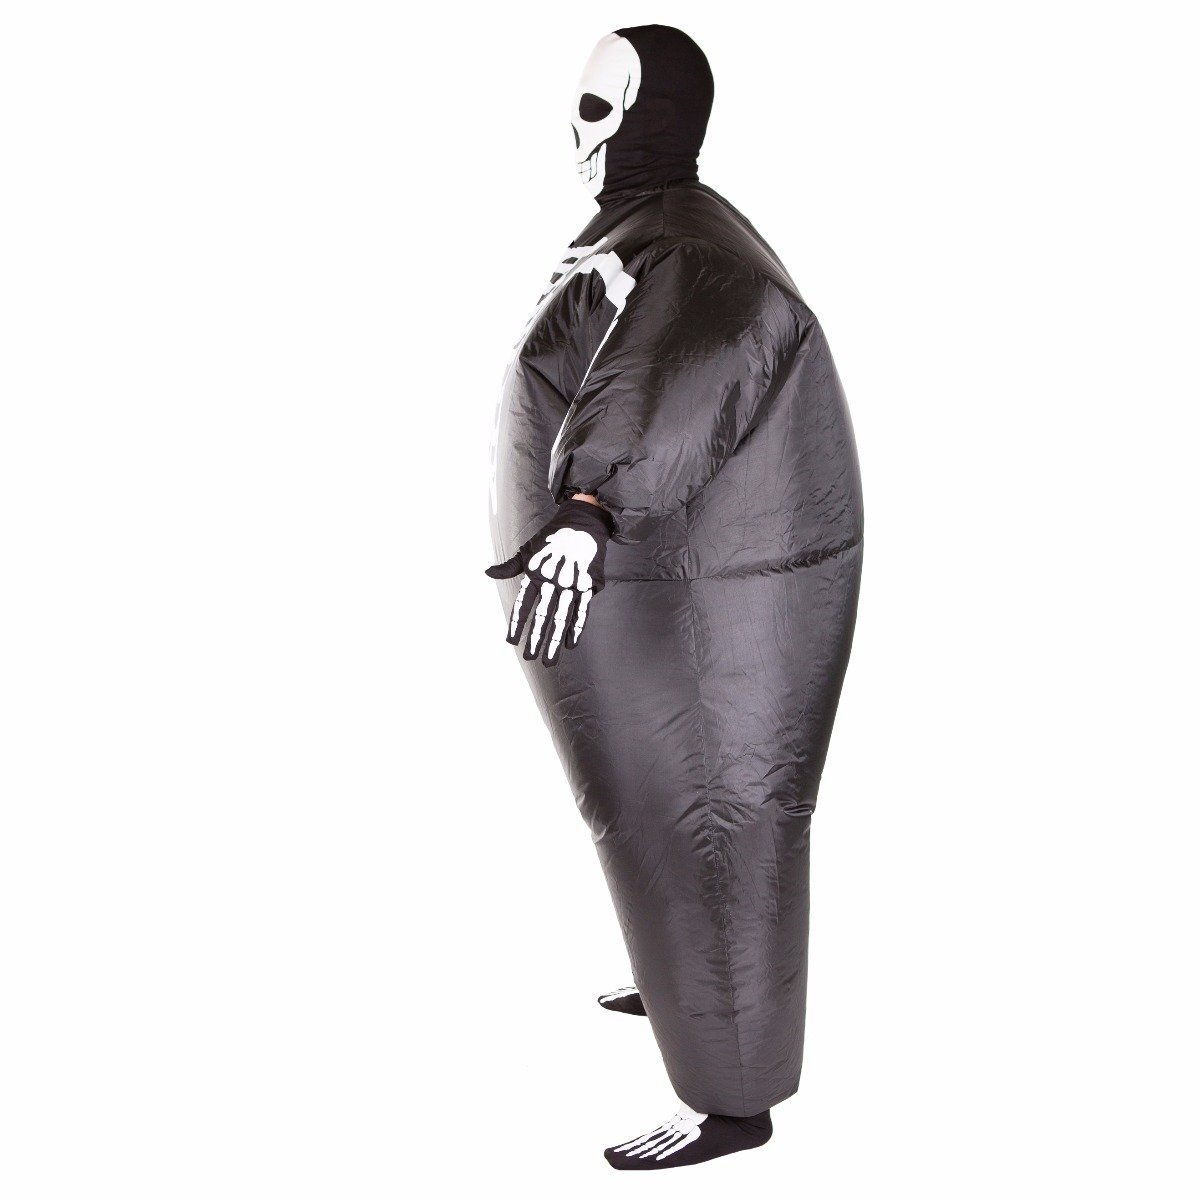 Fancy Dress - Inflatable Skeleton Costume